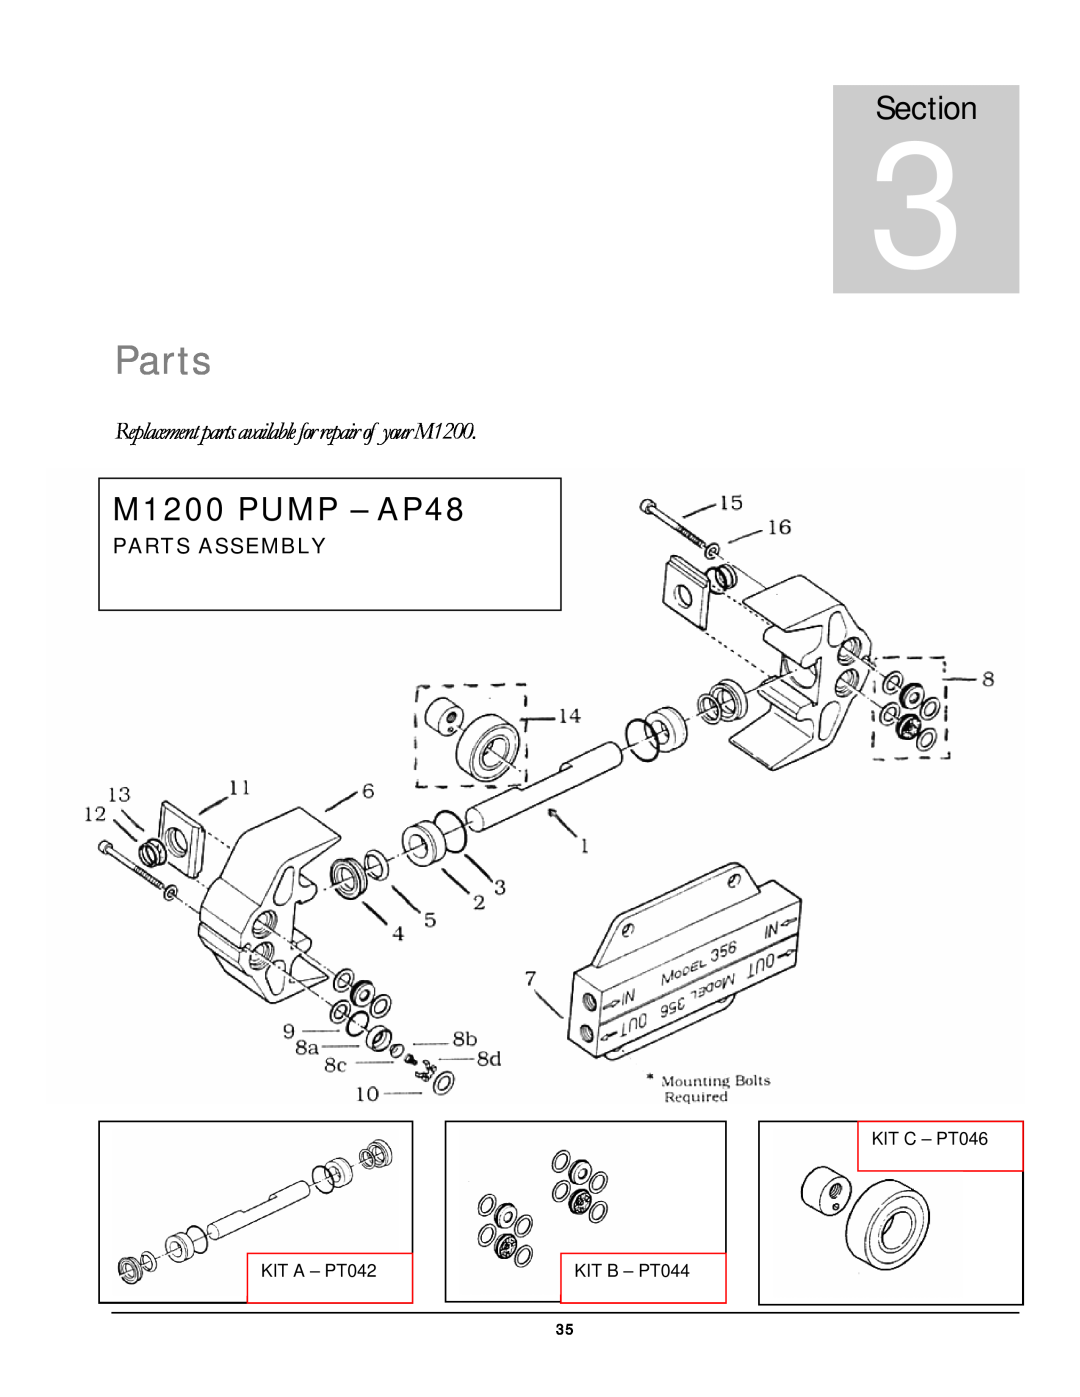 Olympus manual M1200 PUMP - AP48, 3Section, Parts Assembly, KIT A - PT042, KIT B - PT044, KIT C - PT046 